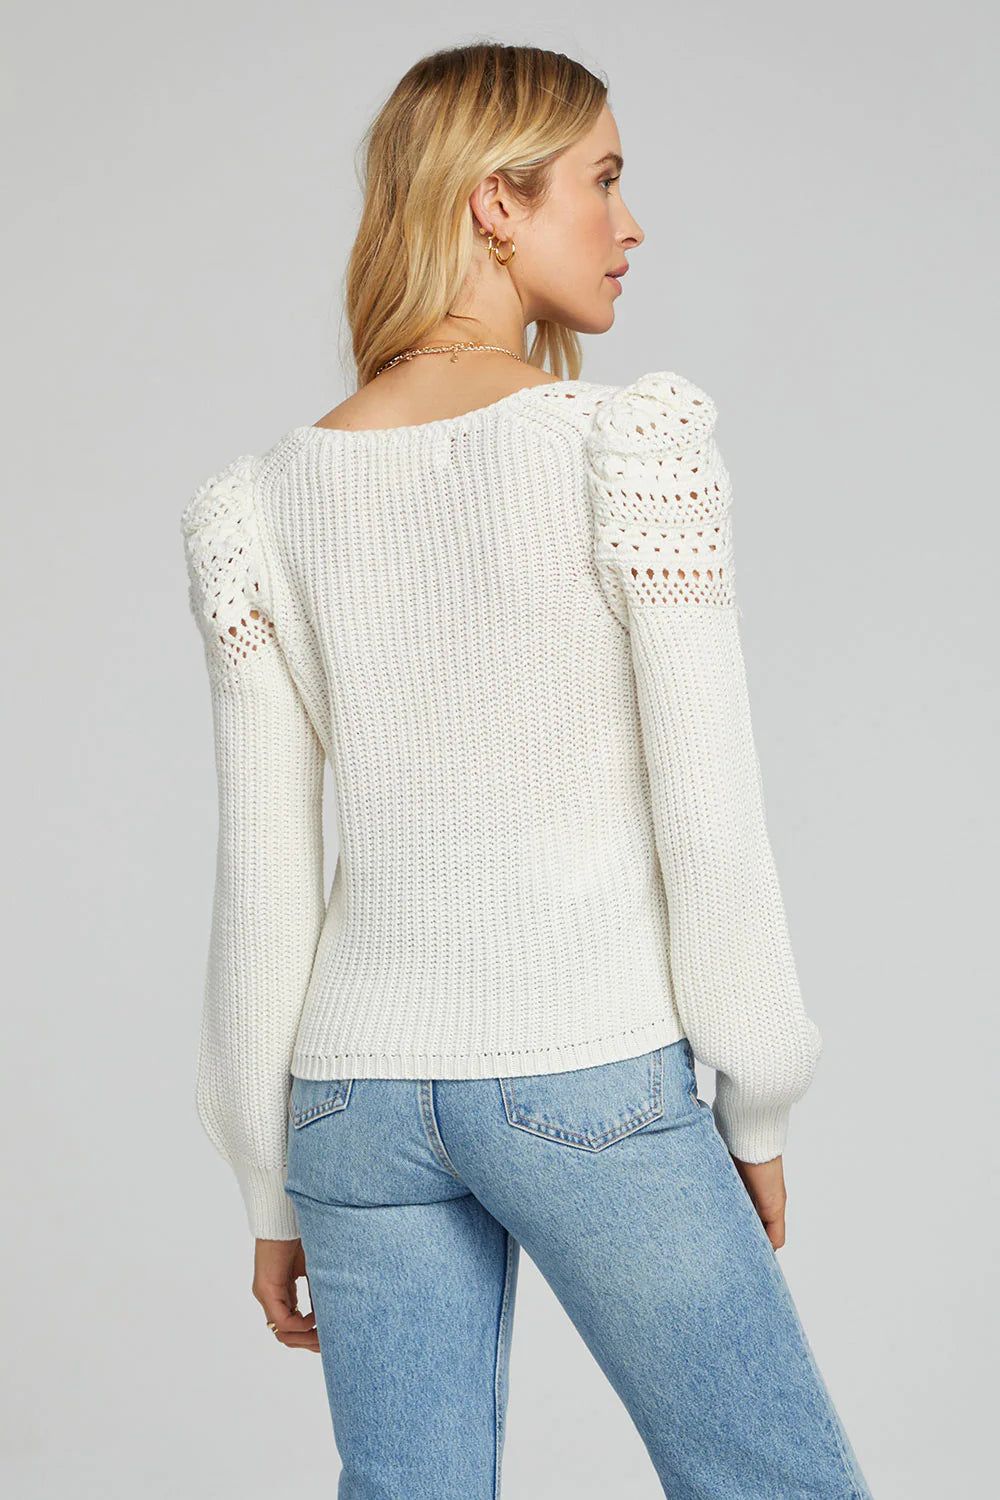 Saltwater Luxe Corrine Sweater